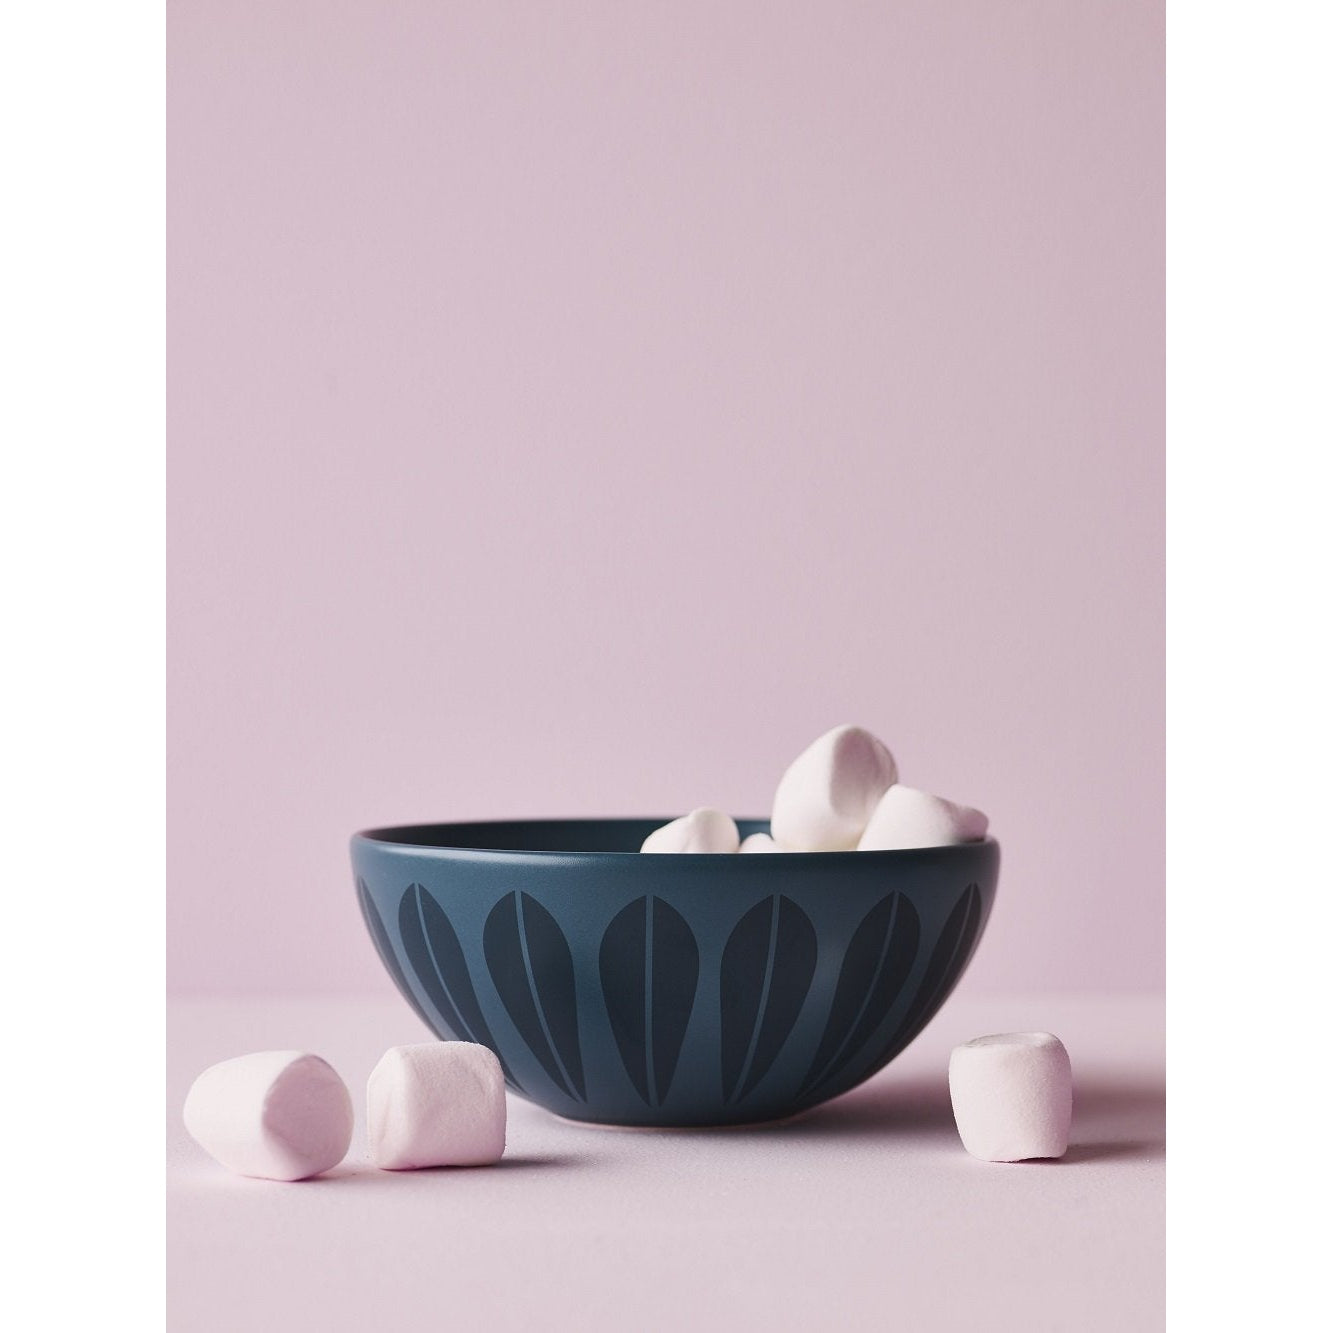 Lucie Kaas Arne Clausen Collection Sugar Bowl, grár